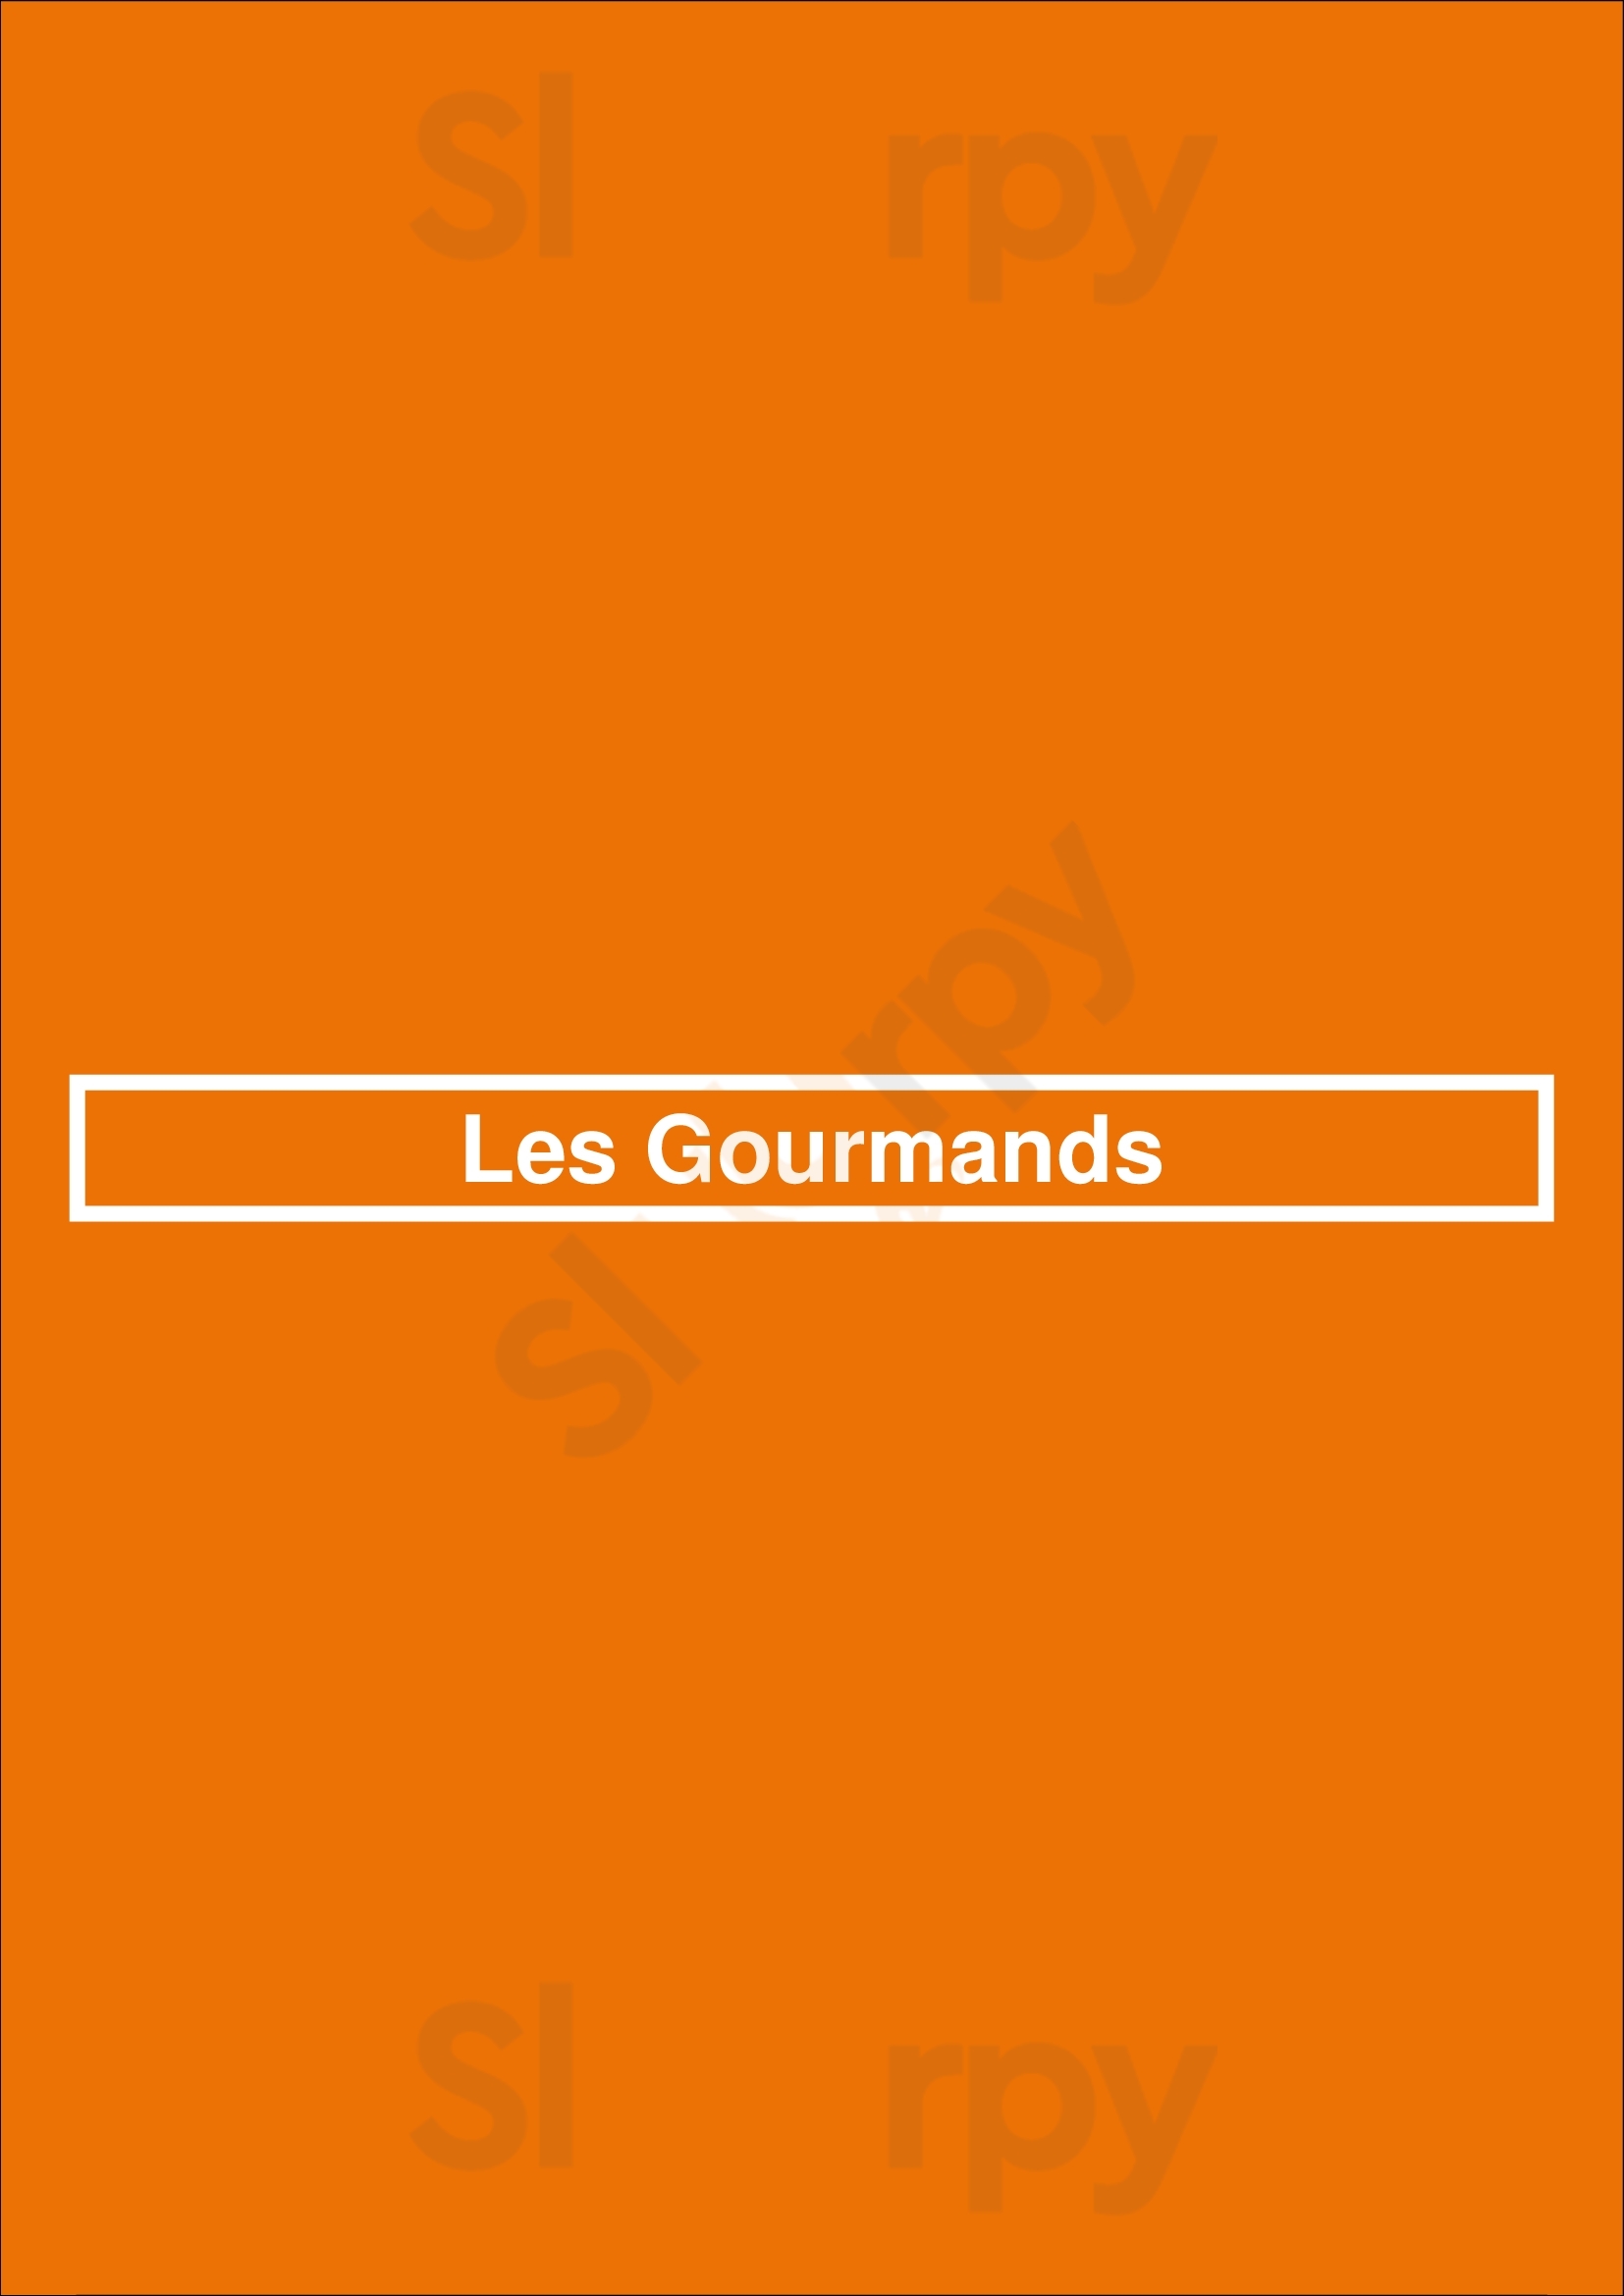 Les Gourmands Mons Menu - 1